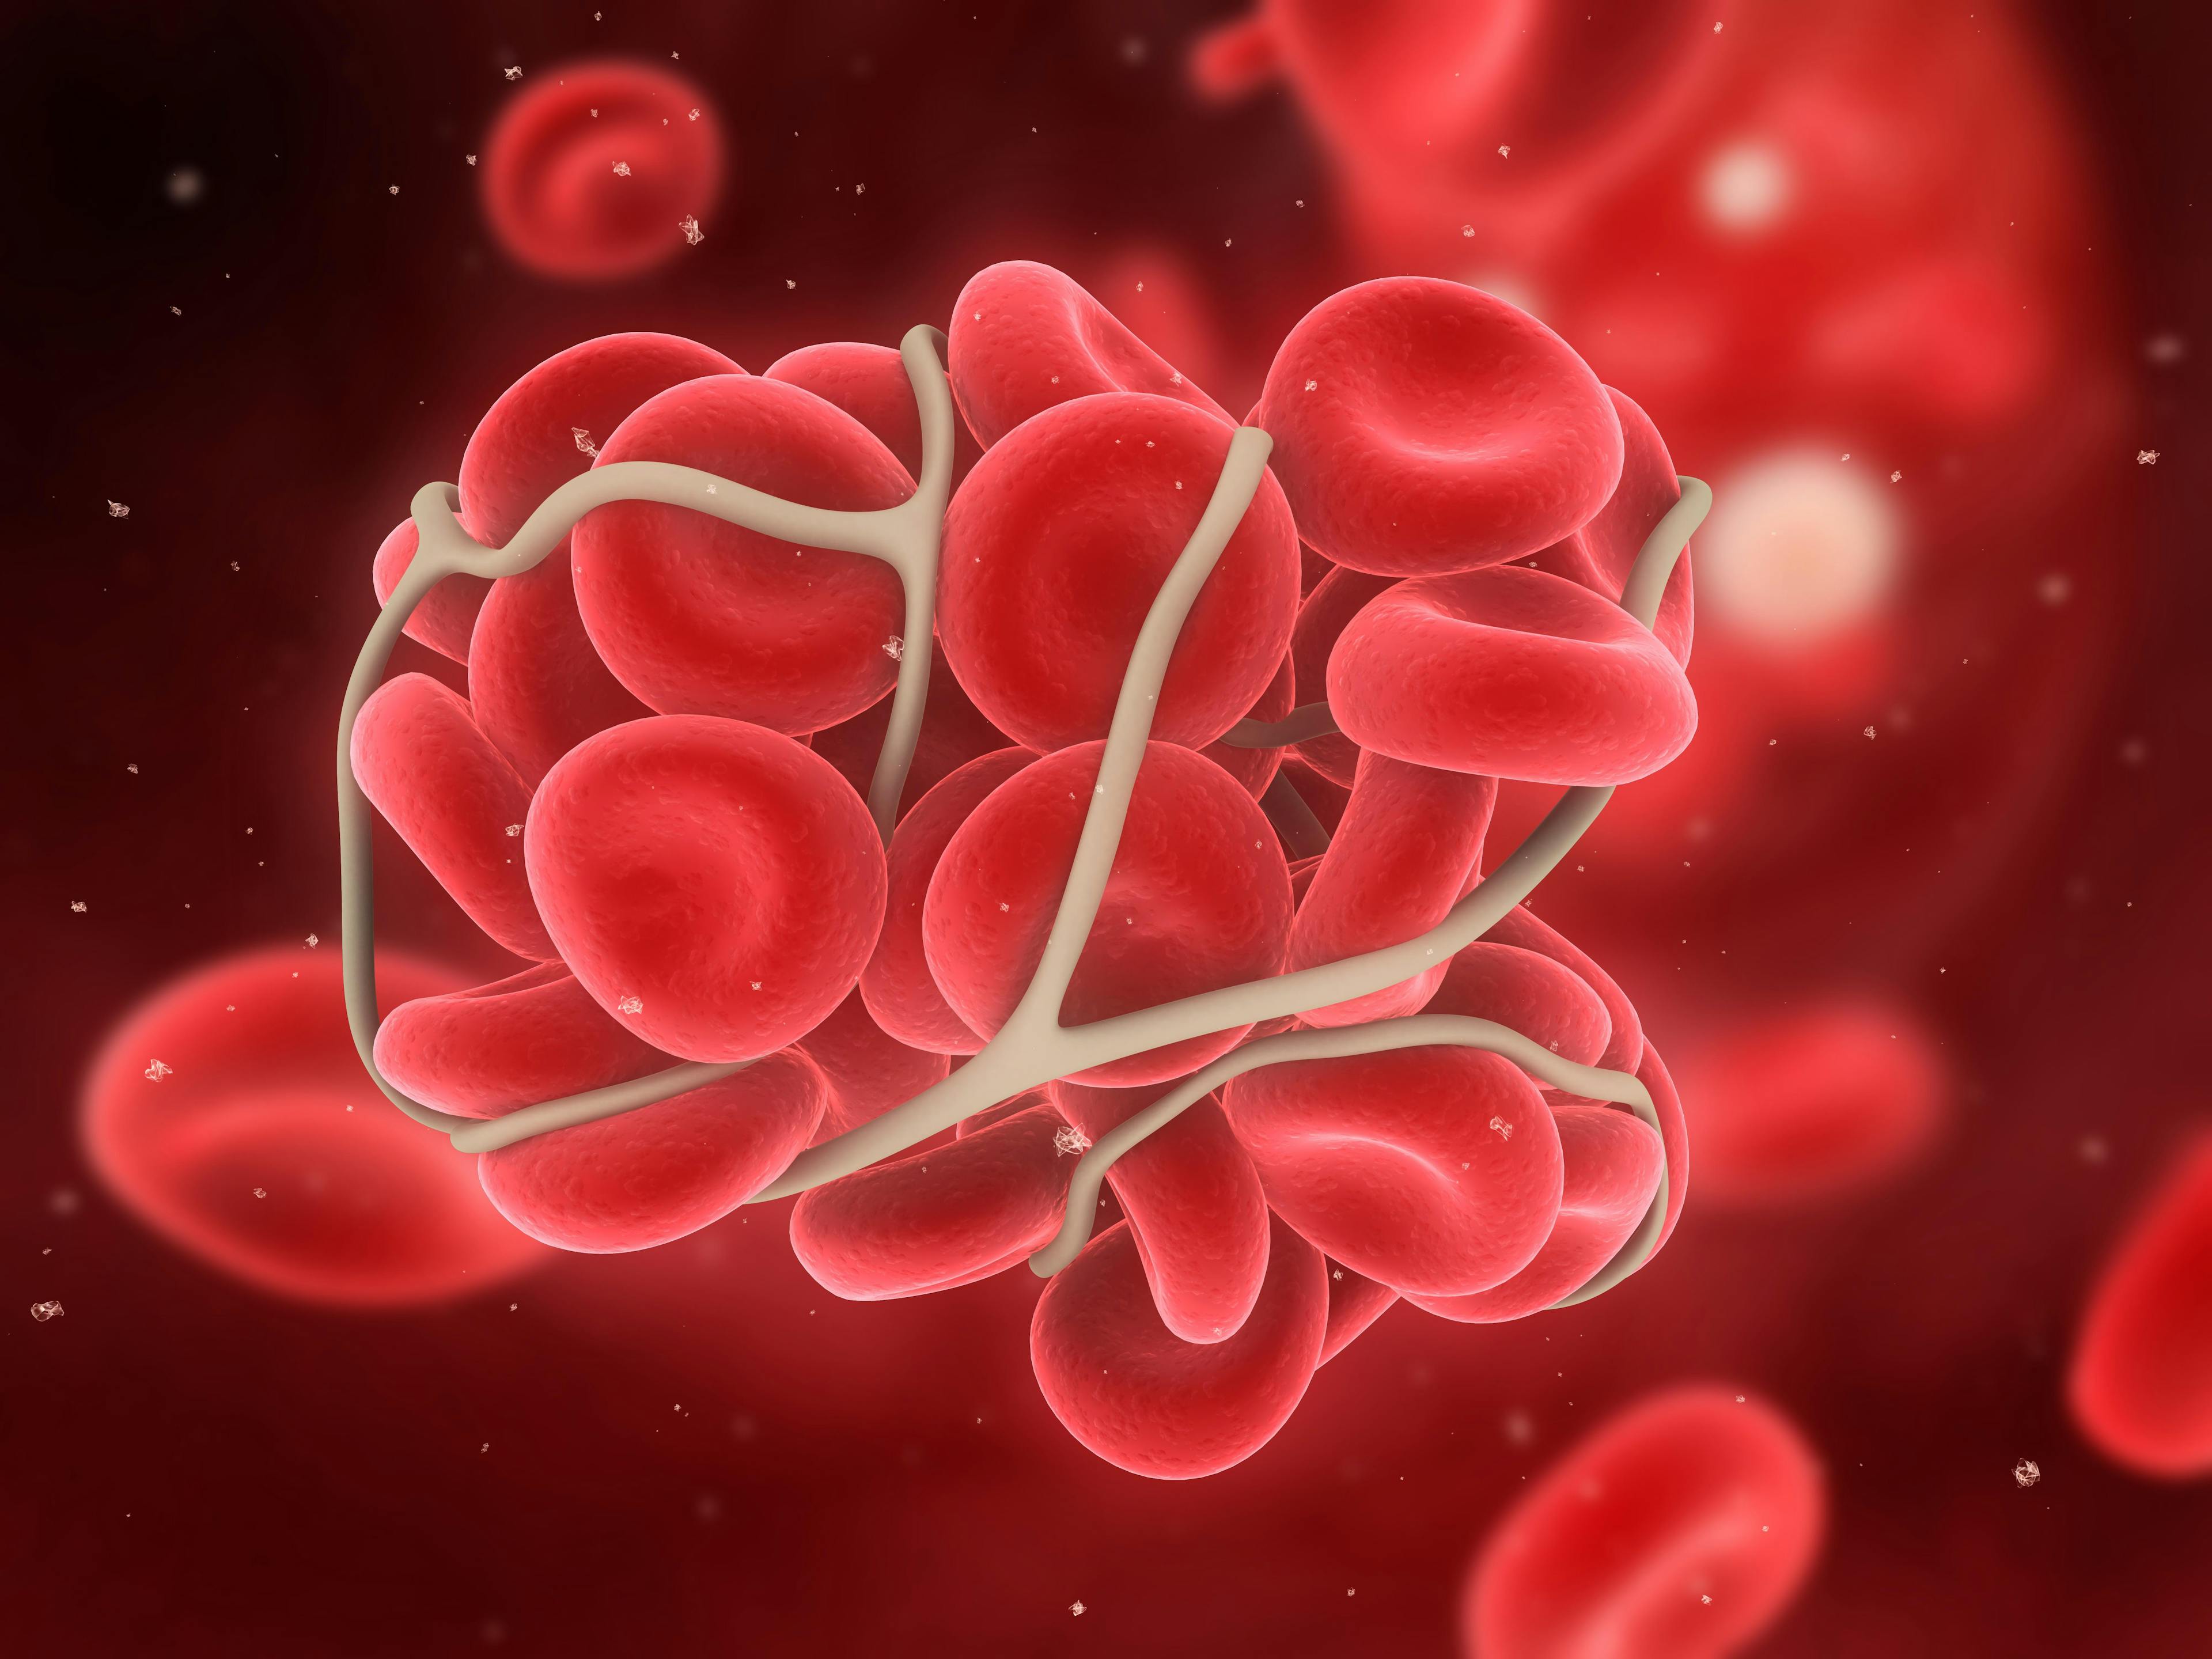 Digital illustratioon of a blood clot